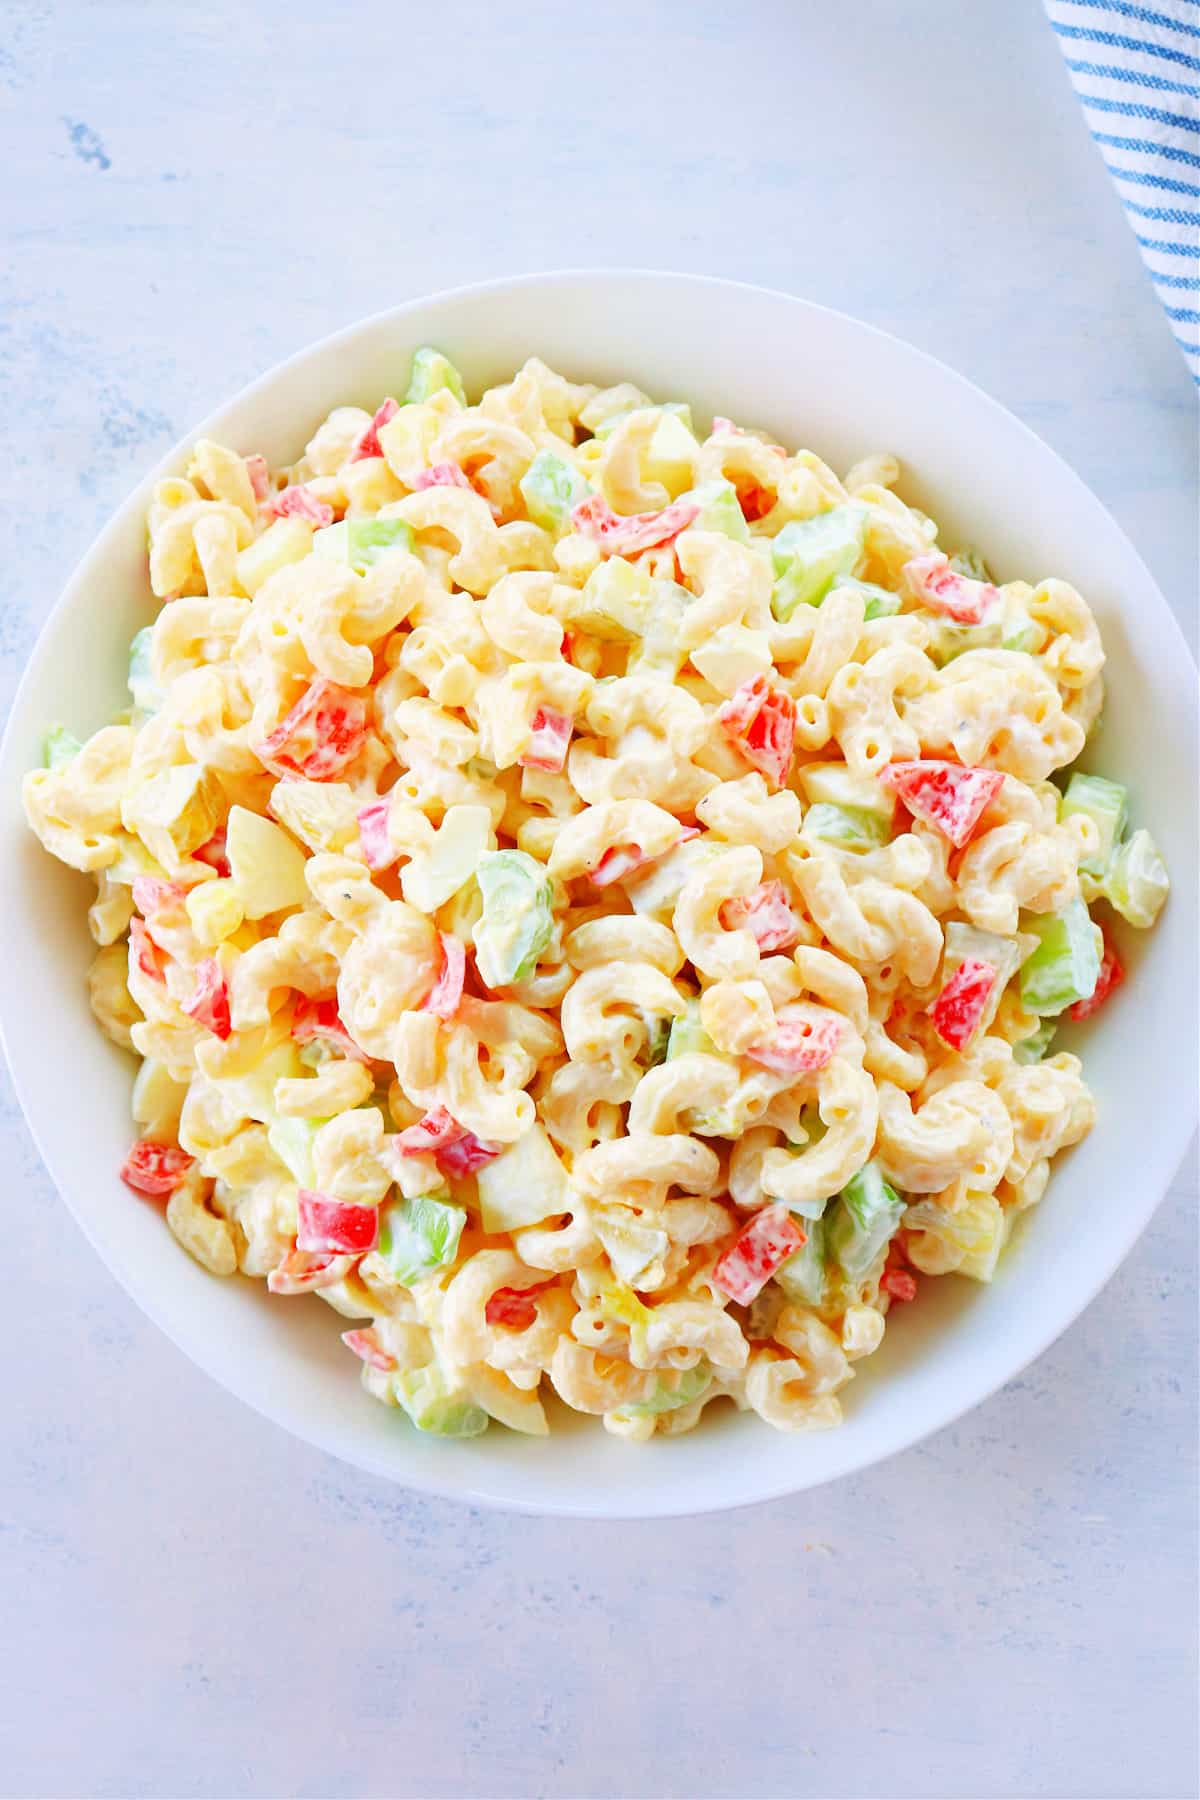 Macaroni salad in a white bowl.